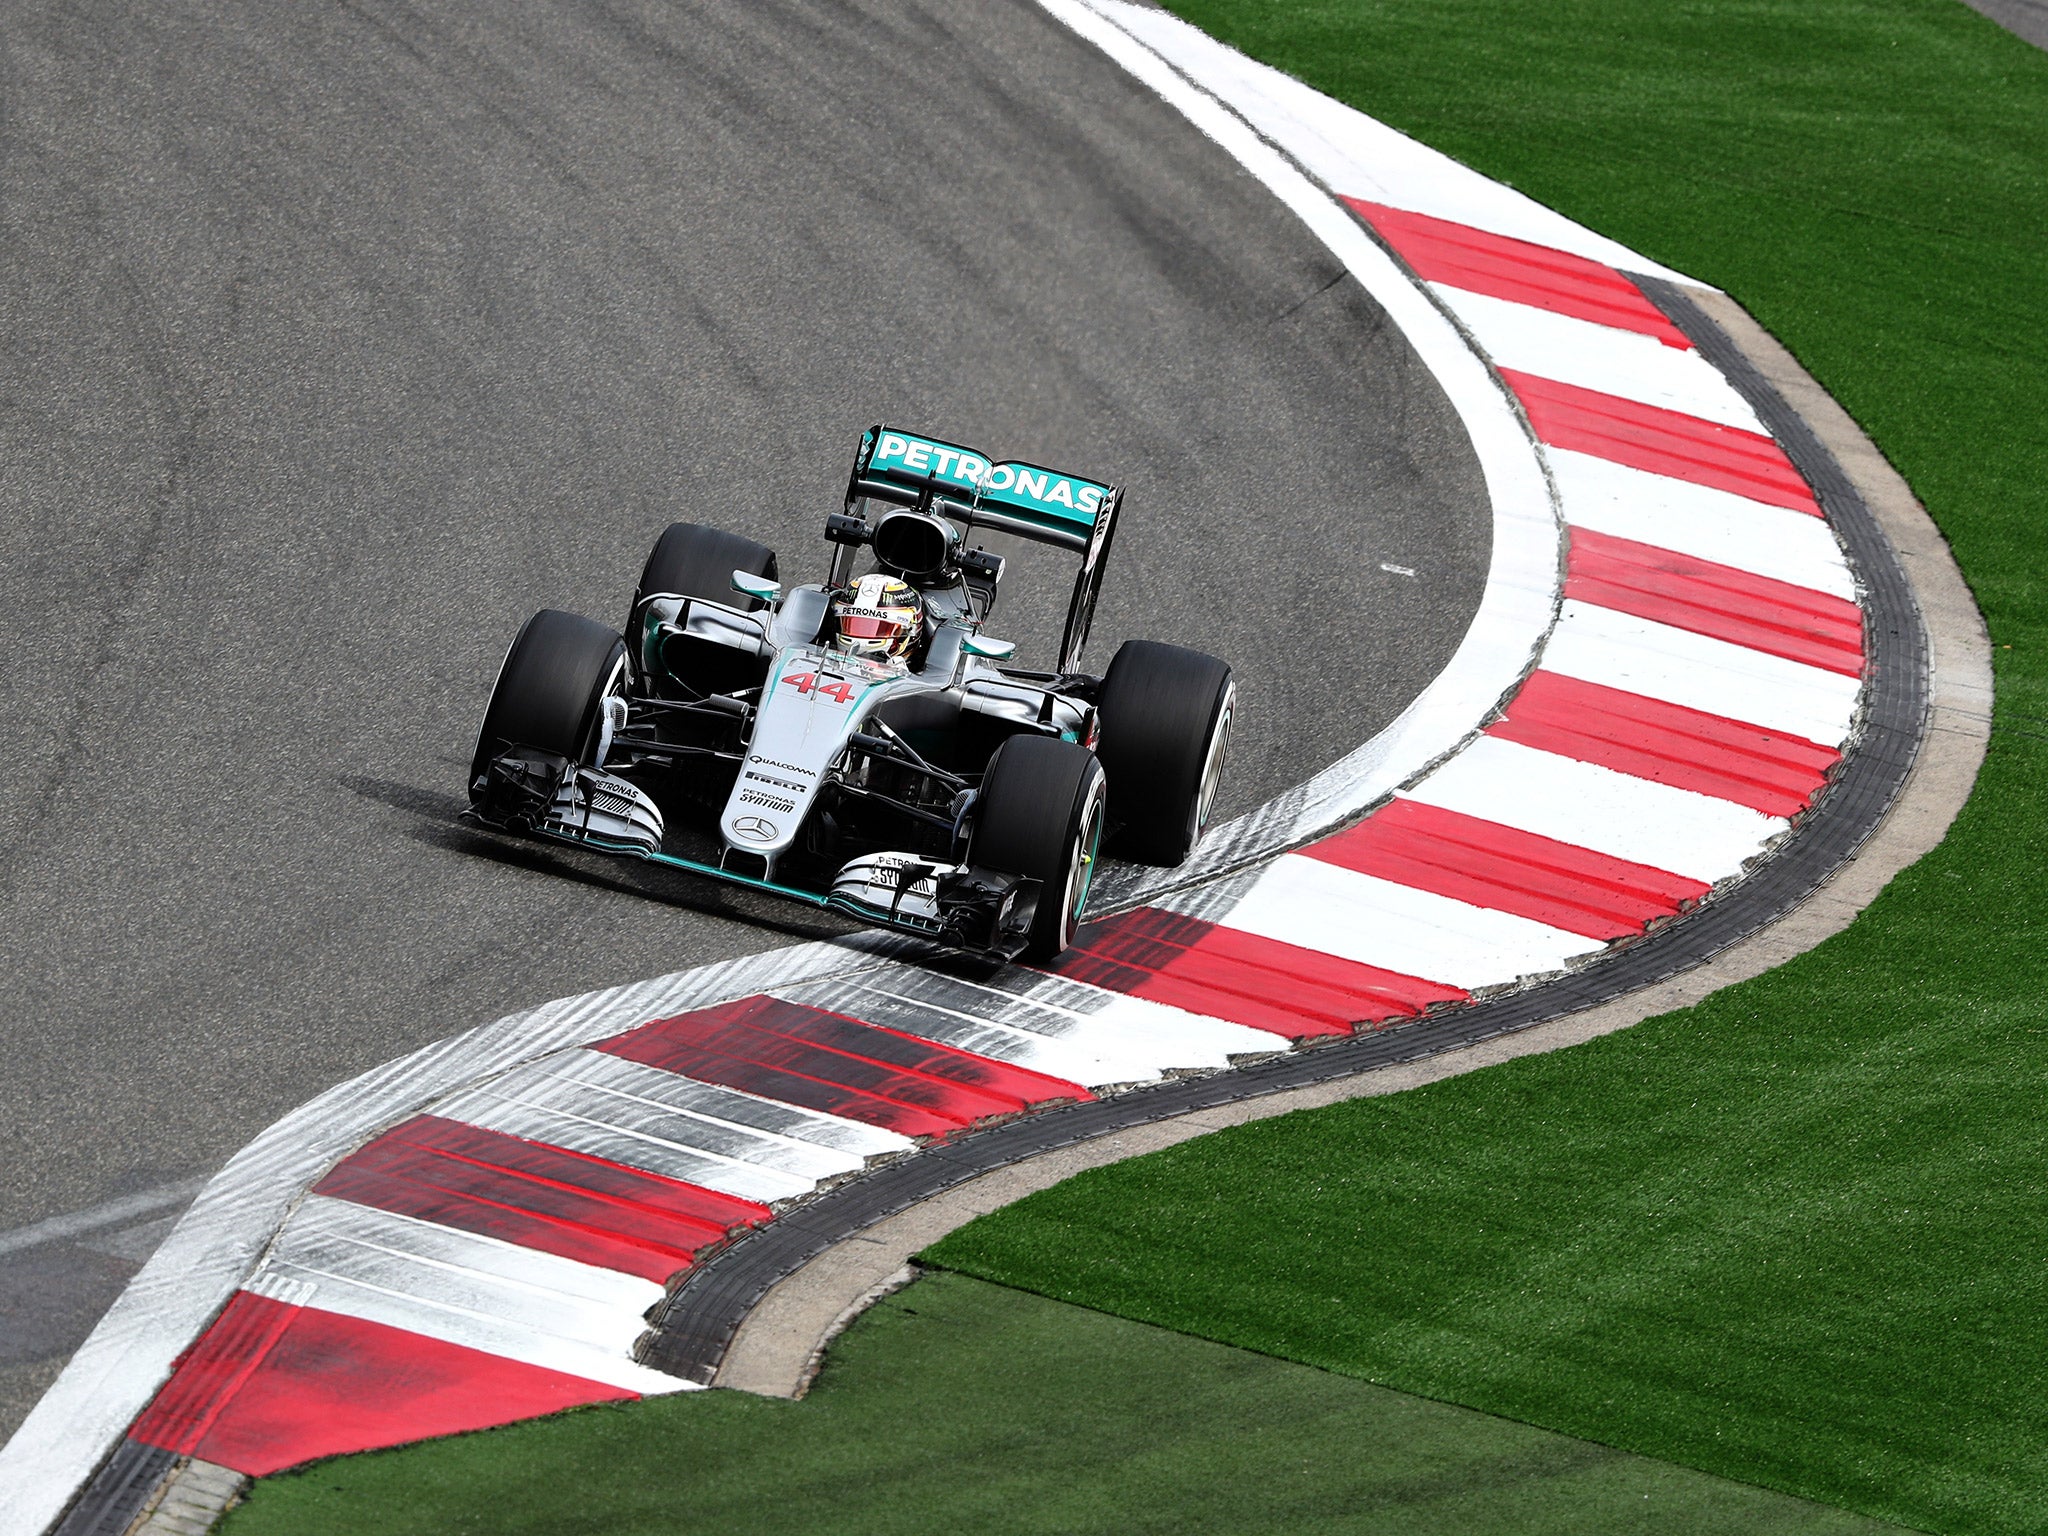 Lewis Hamilton struggled throughout both sessions